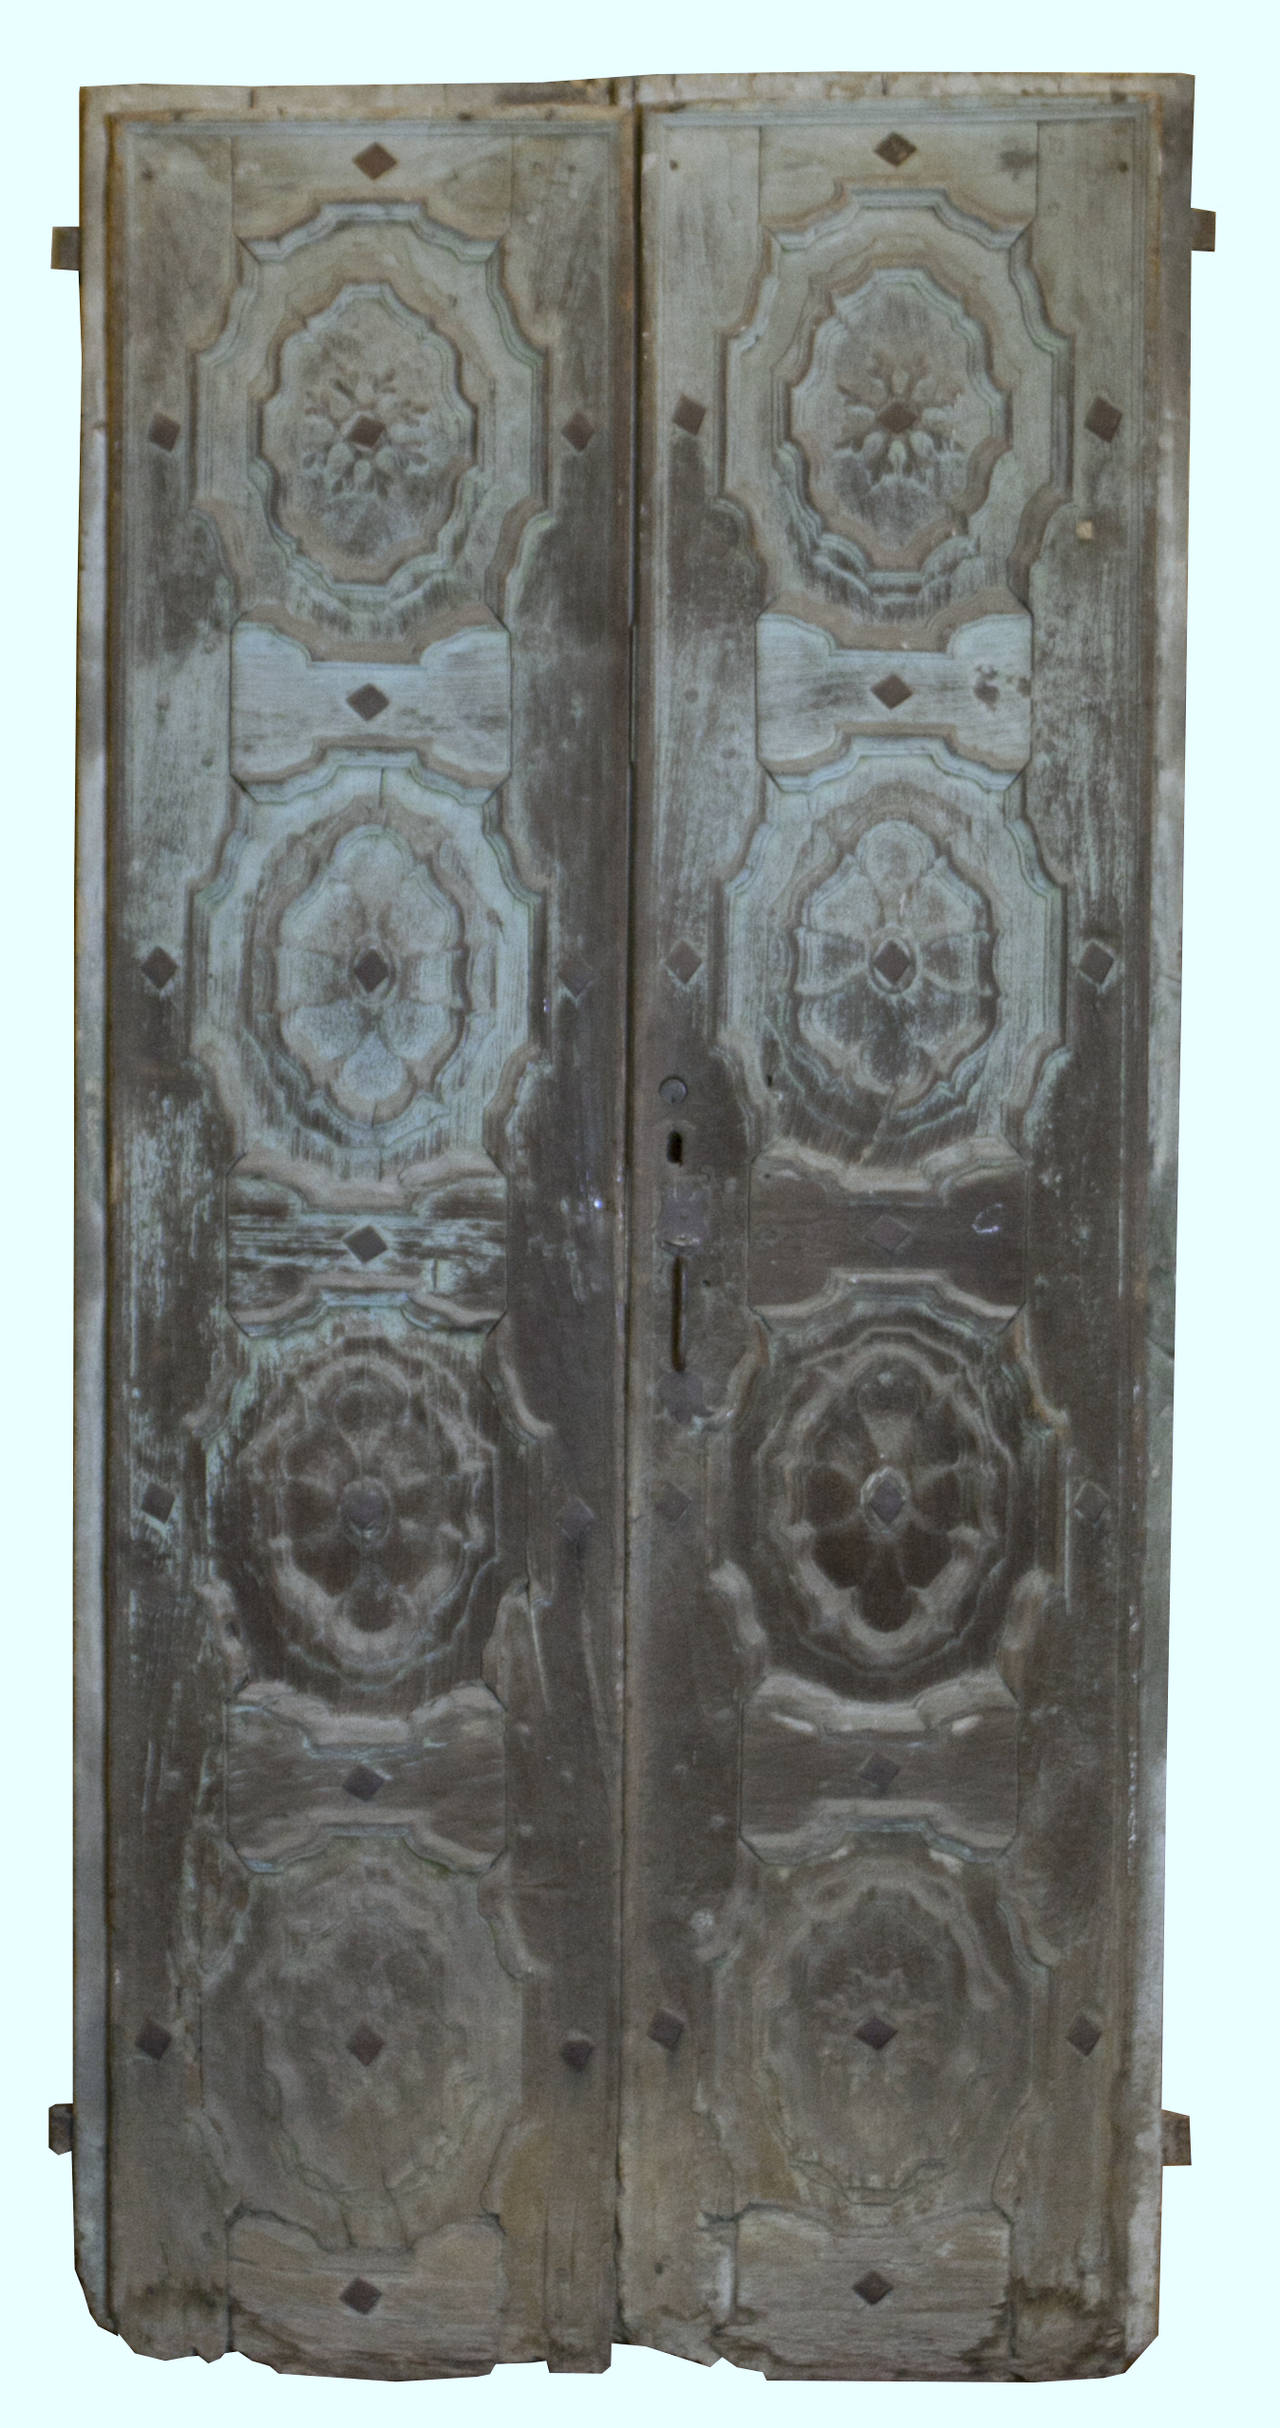 Antique Double door made of Walnut
Comes from Saluzzo, Piemonte